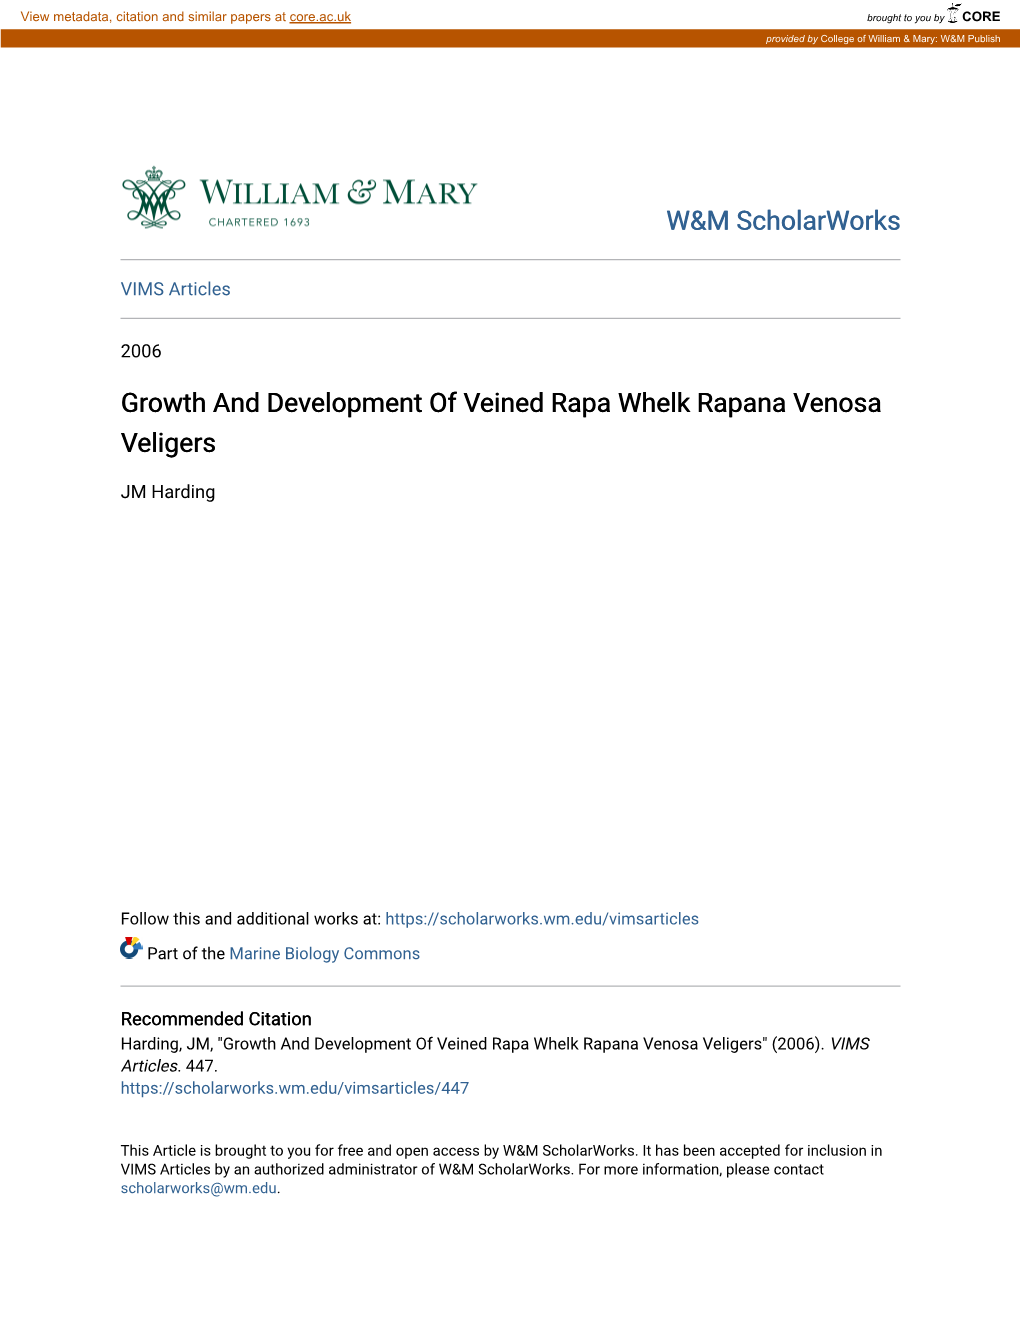 Growth and Development of Veined Rapa Whelk Rapana Venosa Veligers